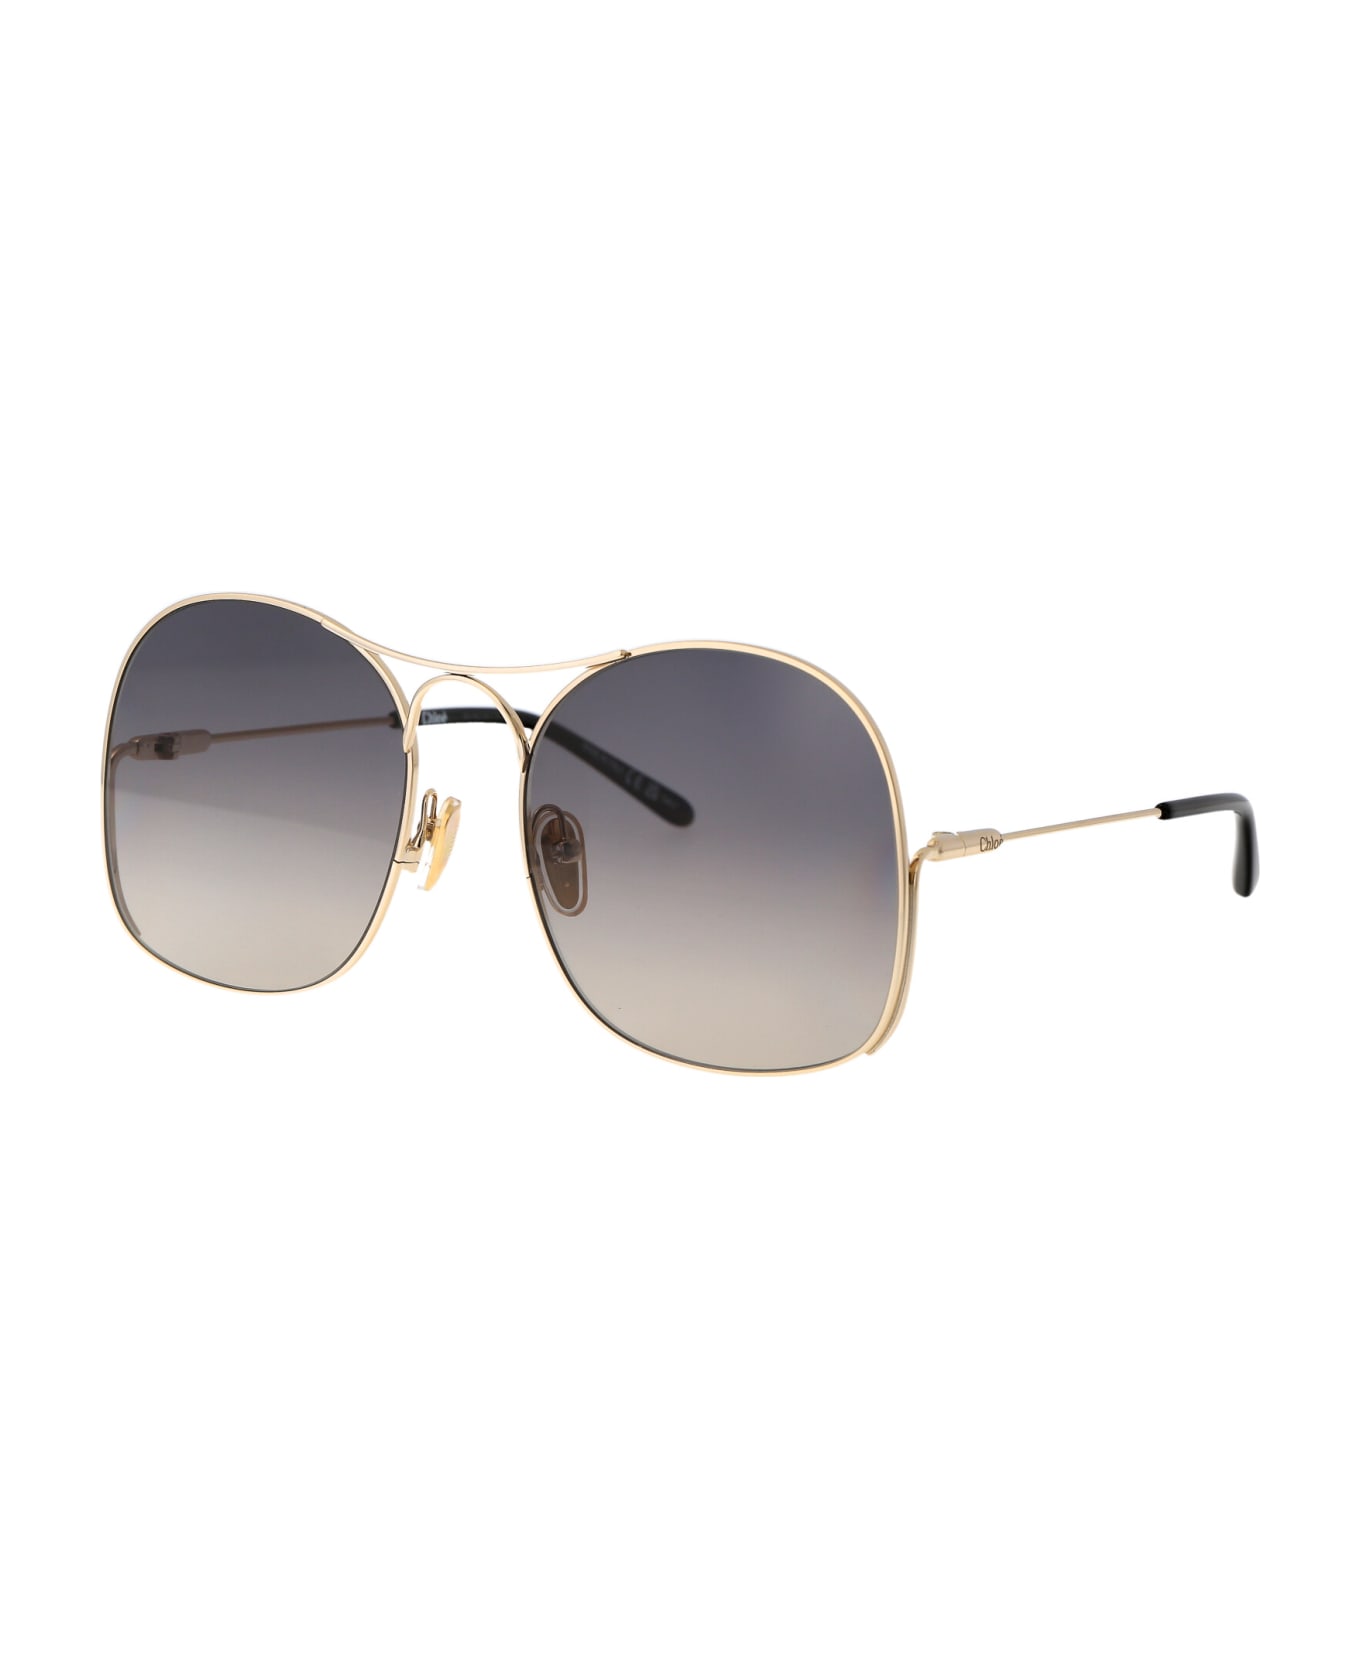 Chloé Eyewear Ch0164s Sunglasses - 001 GOLD GOLD GREY